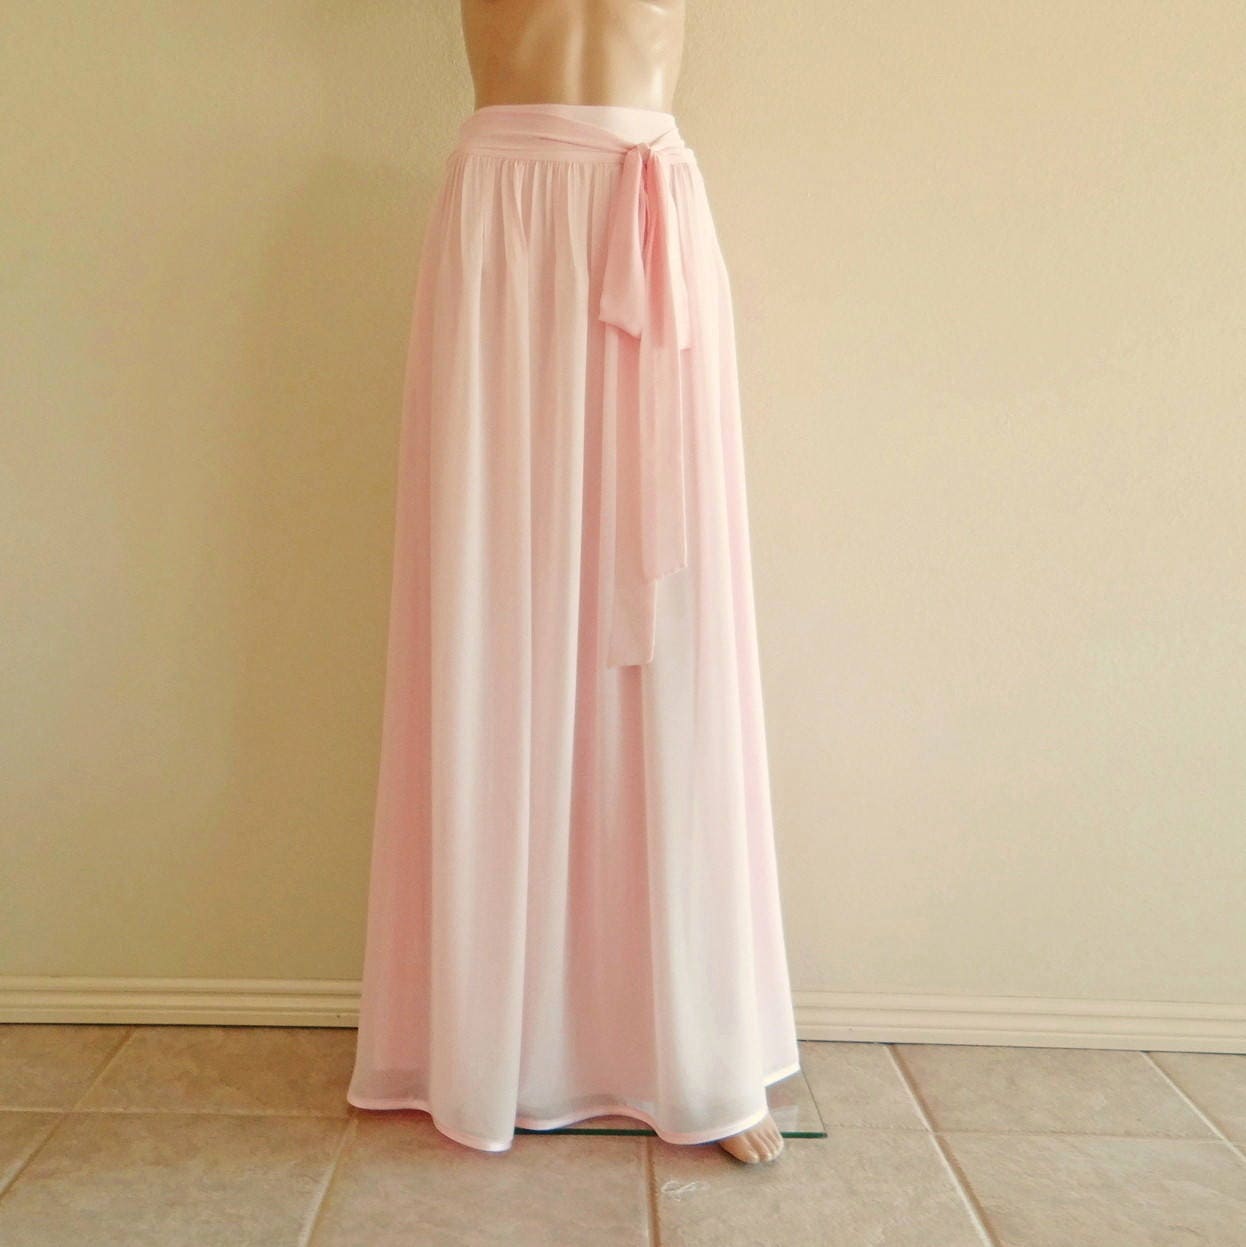 Blush Pink Maxi Skirt.Blush Pink Bridesmaid Skirt. Chiffon